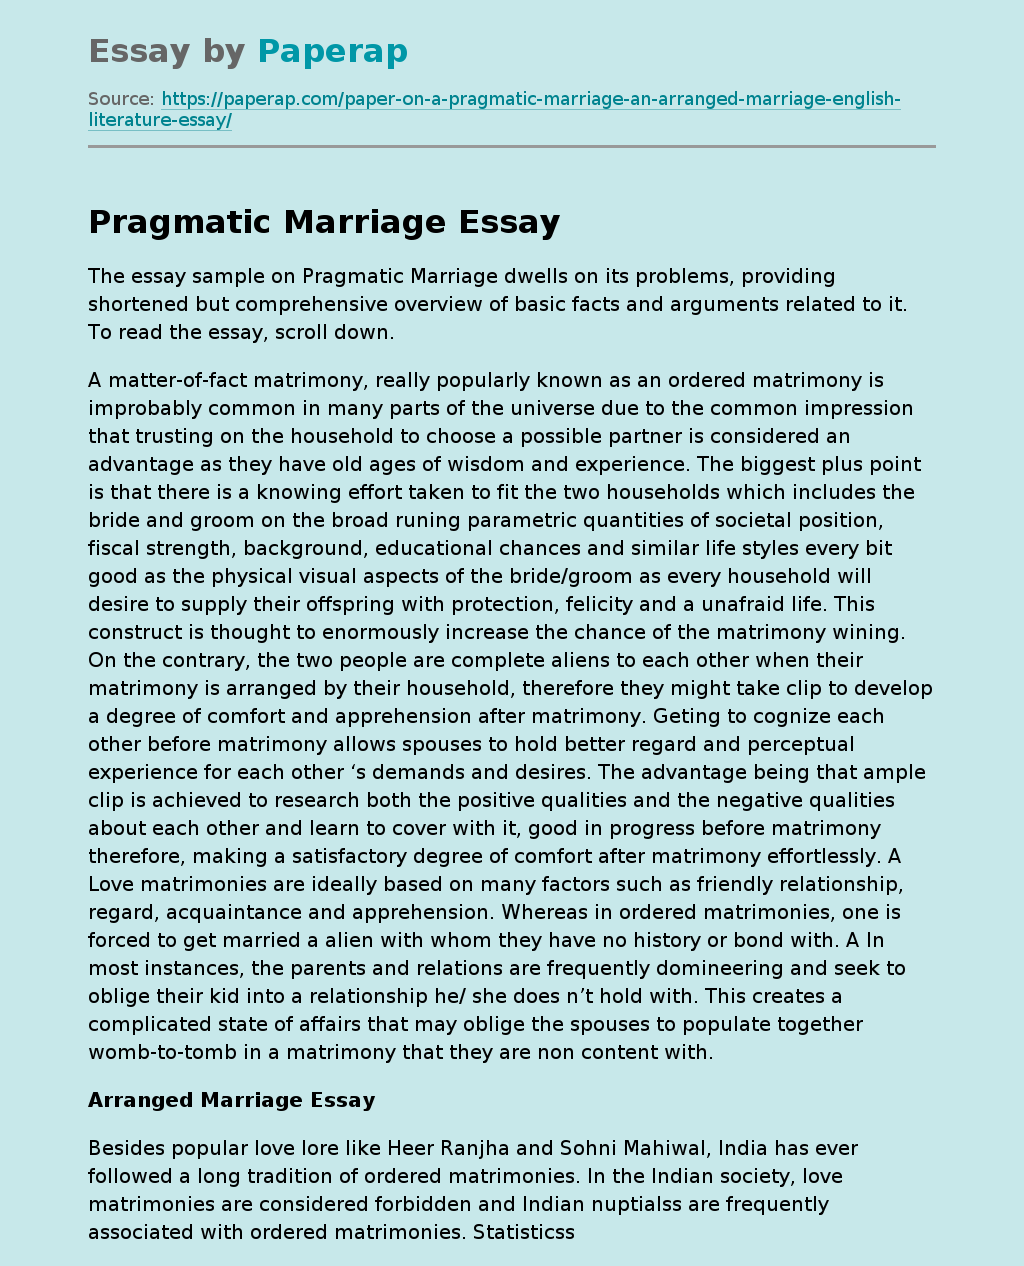 Essay Sample on Pragmatic Marriage